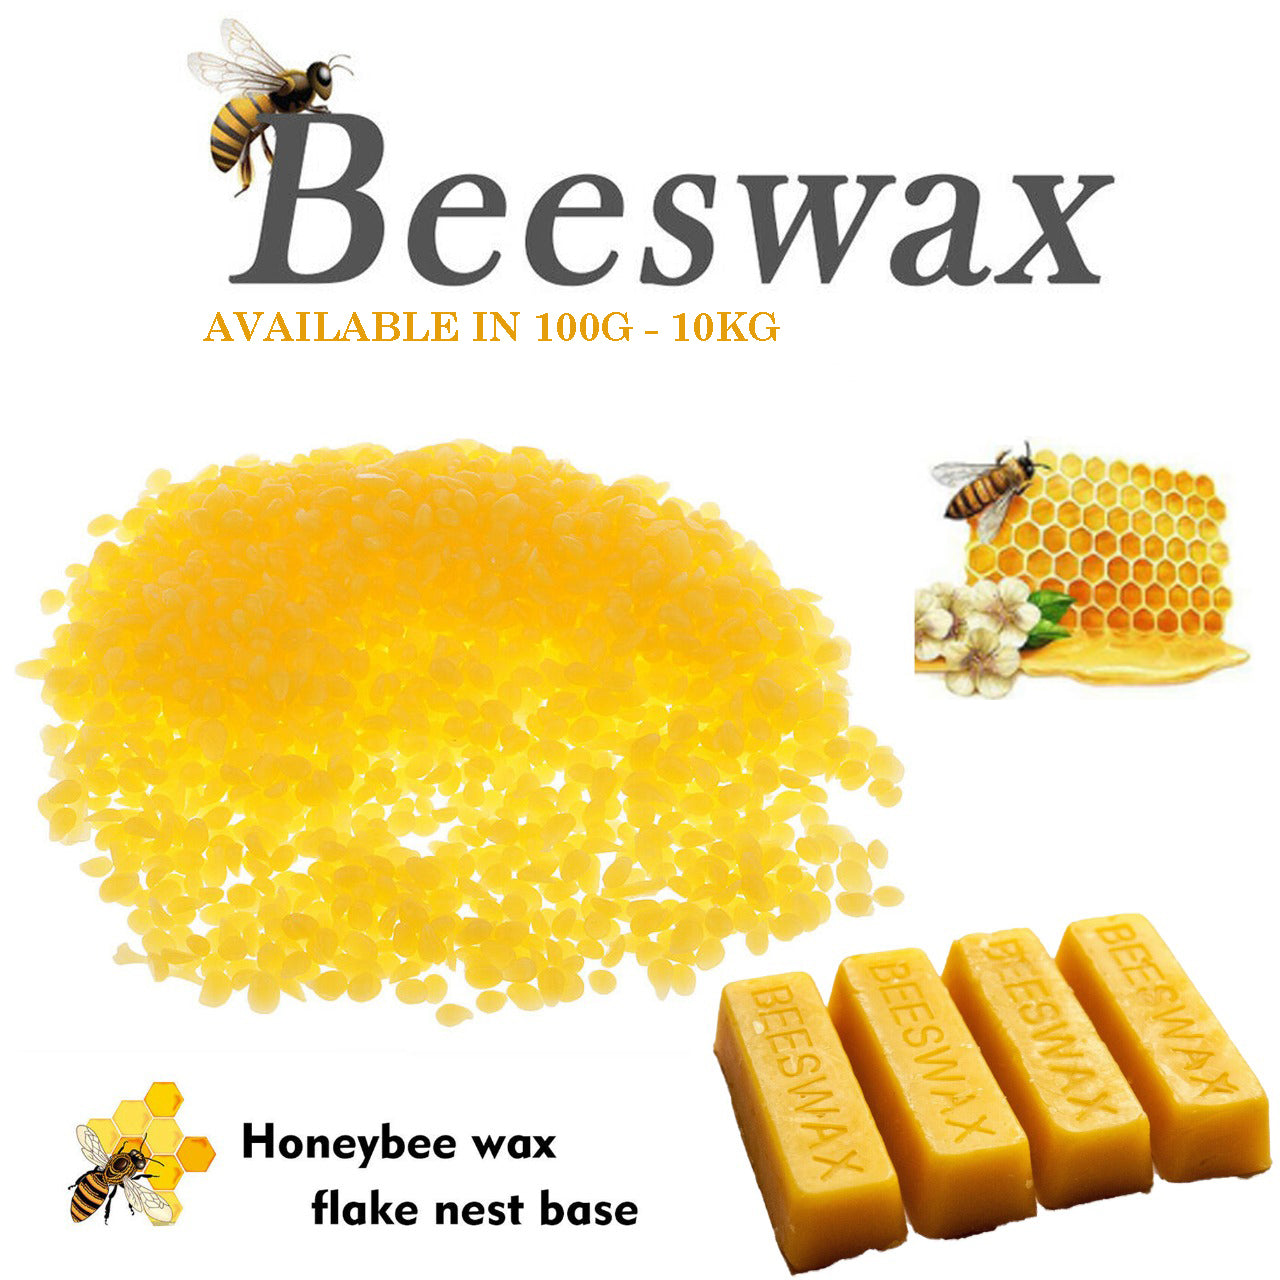 Beeswax pellets